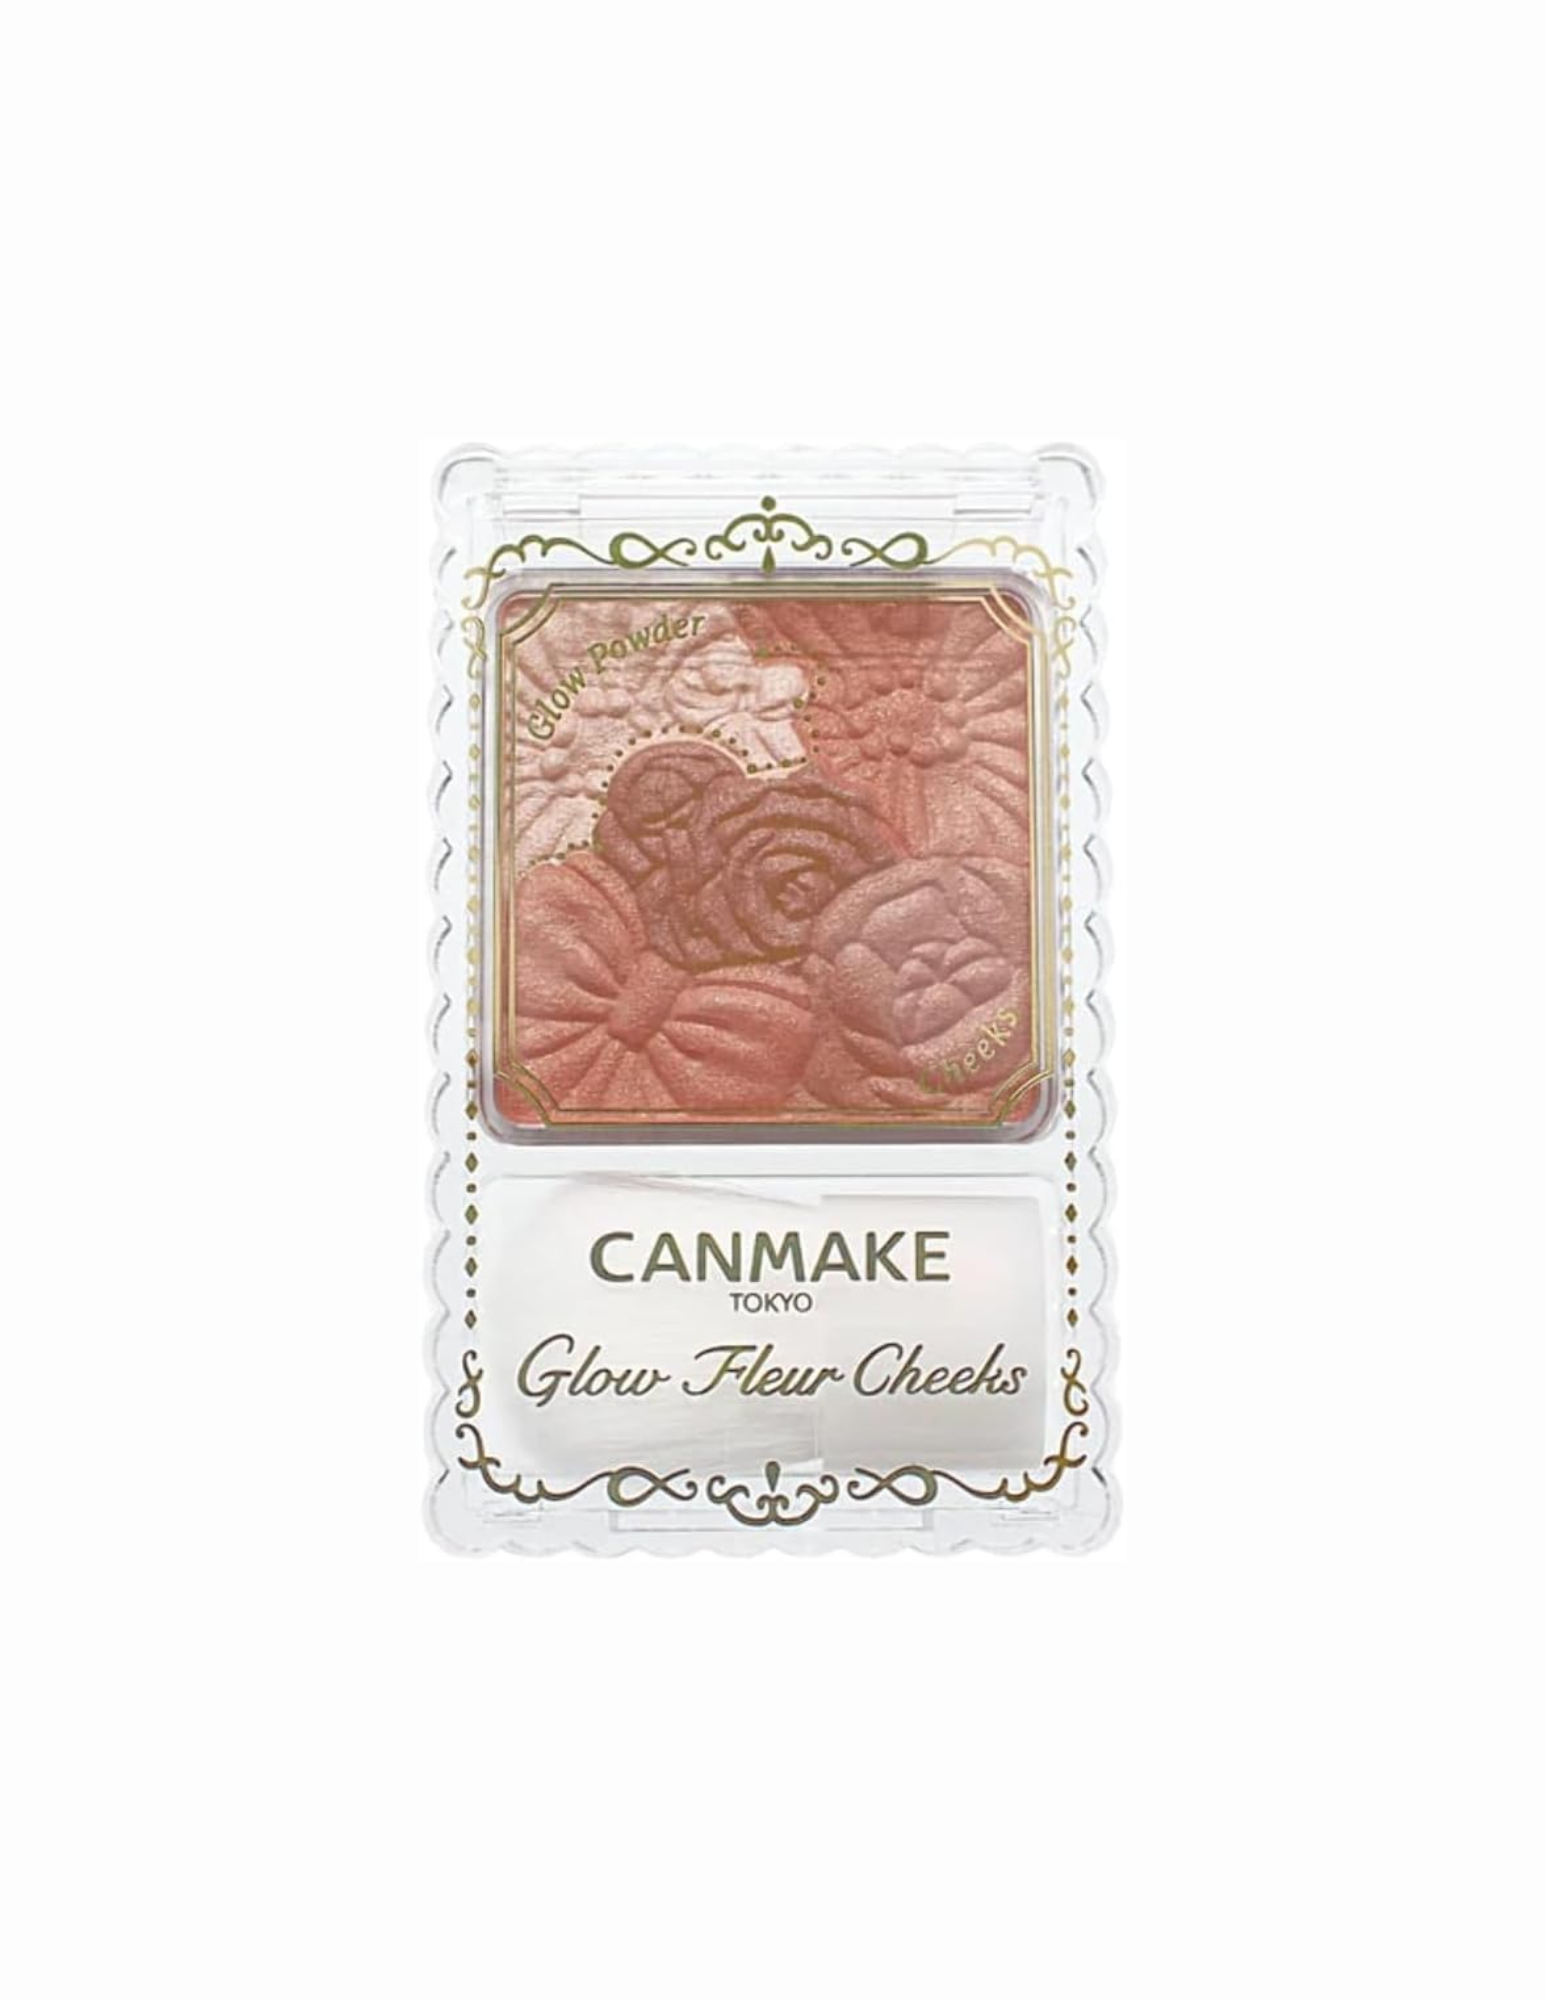 Canmake Glow Fleur Cheeks - Unique Bunny